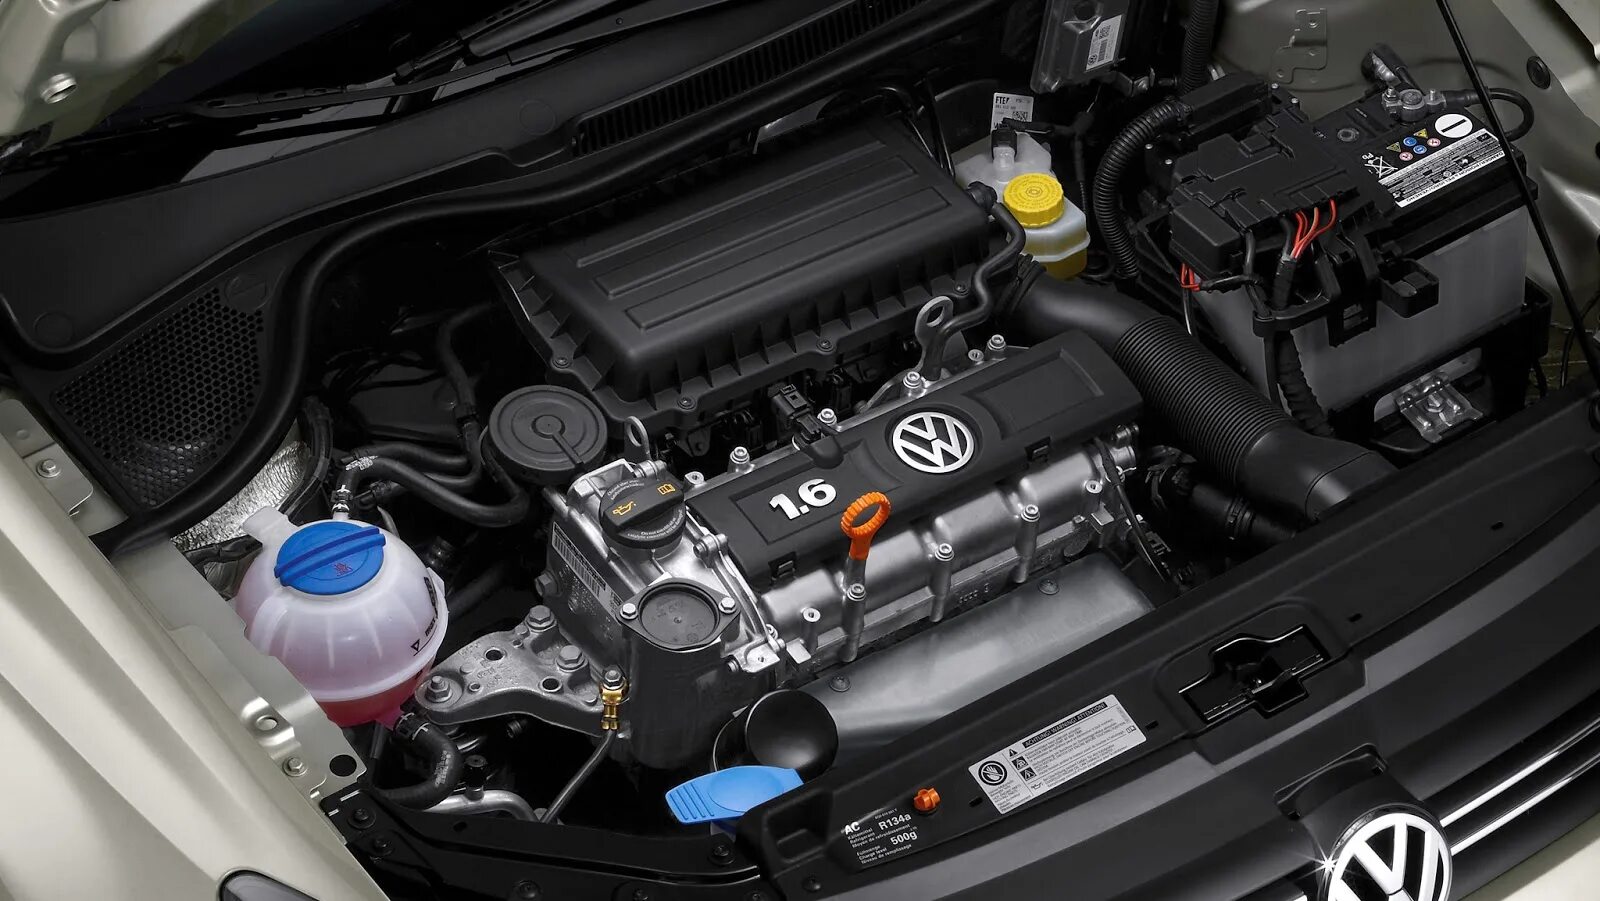 Vw polo 1.6 110 л с. Фольксваген поло ДВС 1.6. Двигатель 1,6 MPI Volkswagen Polo. Двигатель 1.6 поло седан 2010. Двигатель Фольксваген поло 1.6 110.